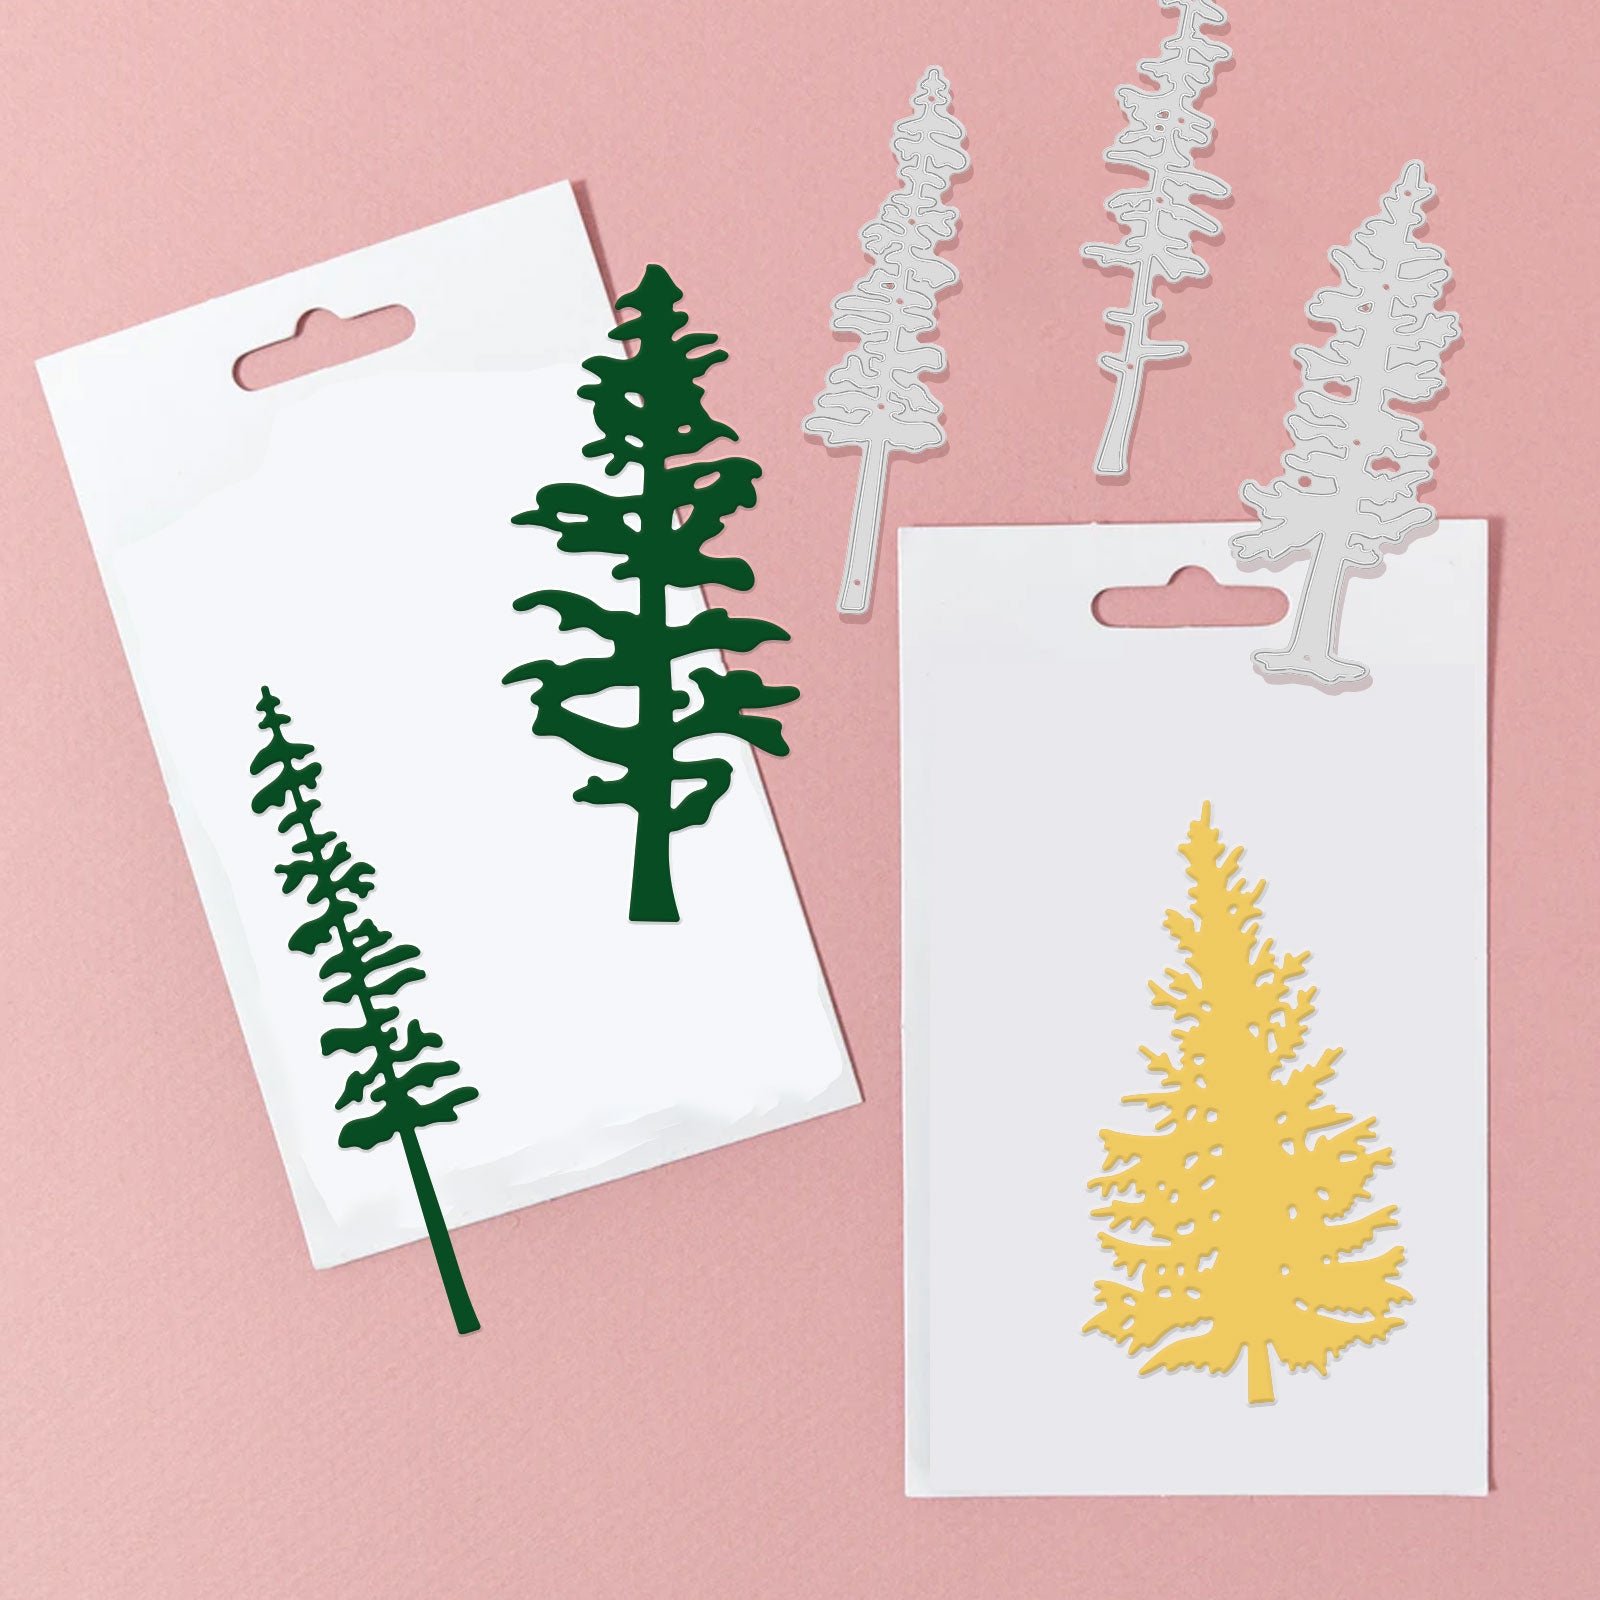 Globleland 8 Pcs Pine Tree, Christmas Tree Carbon Steel Cutting Dies Stencils, for DIY Scrapbooking/Photo Album, Decorative Embossing DIY Paper Card